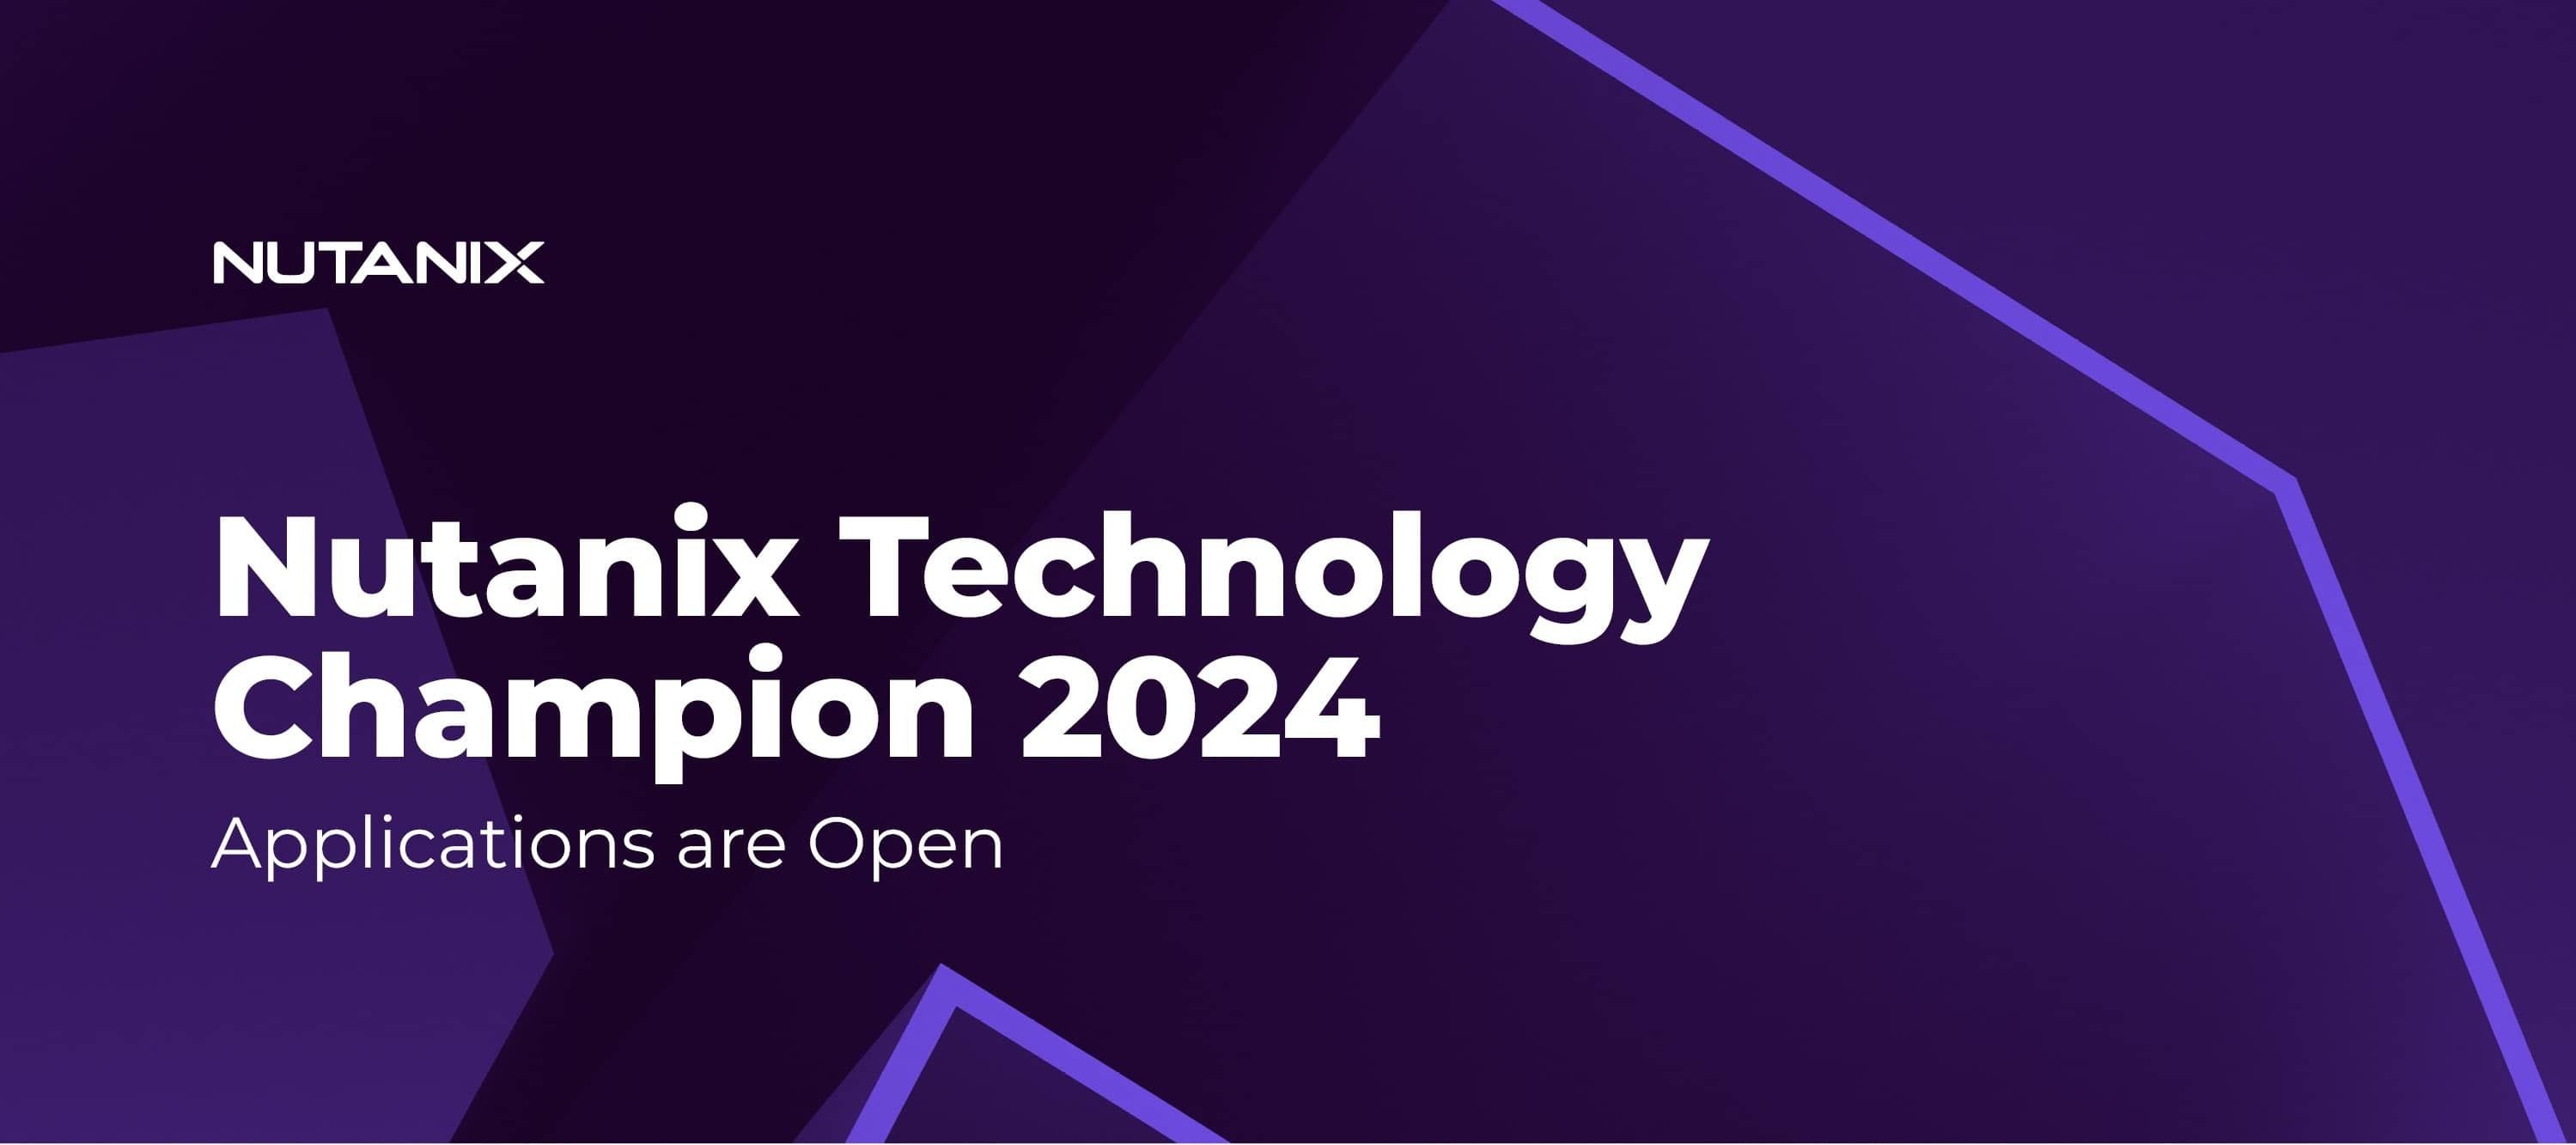 Nutanix Technology Champion 2024 Applications are Open